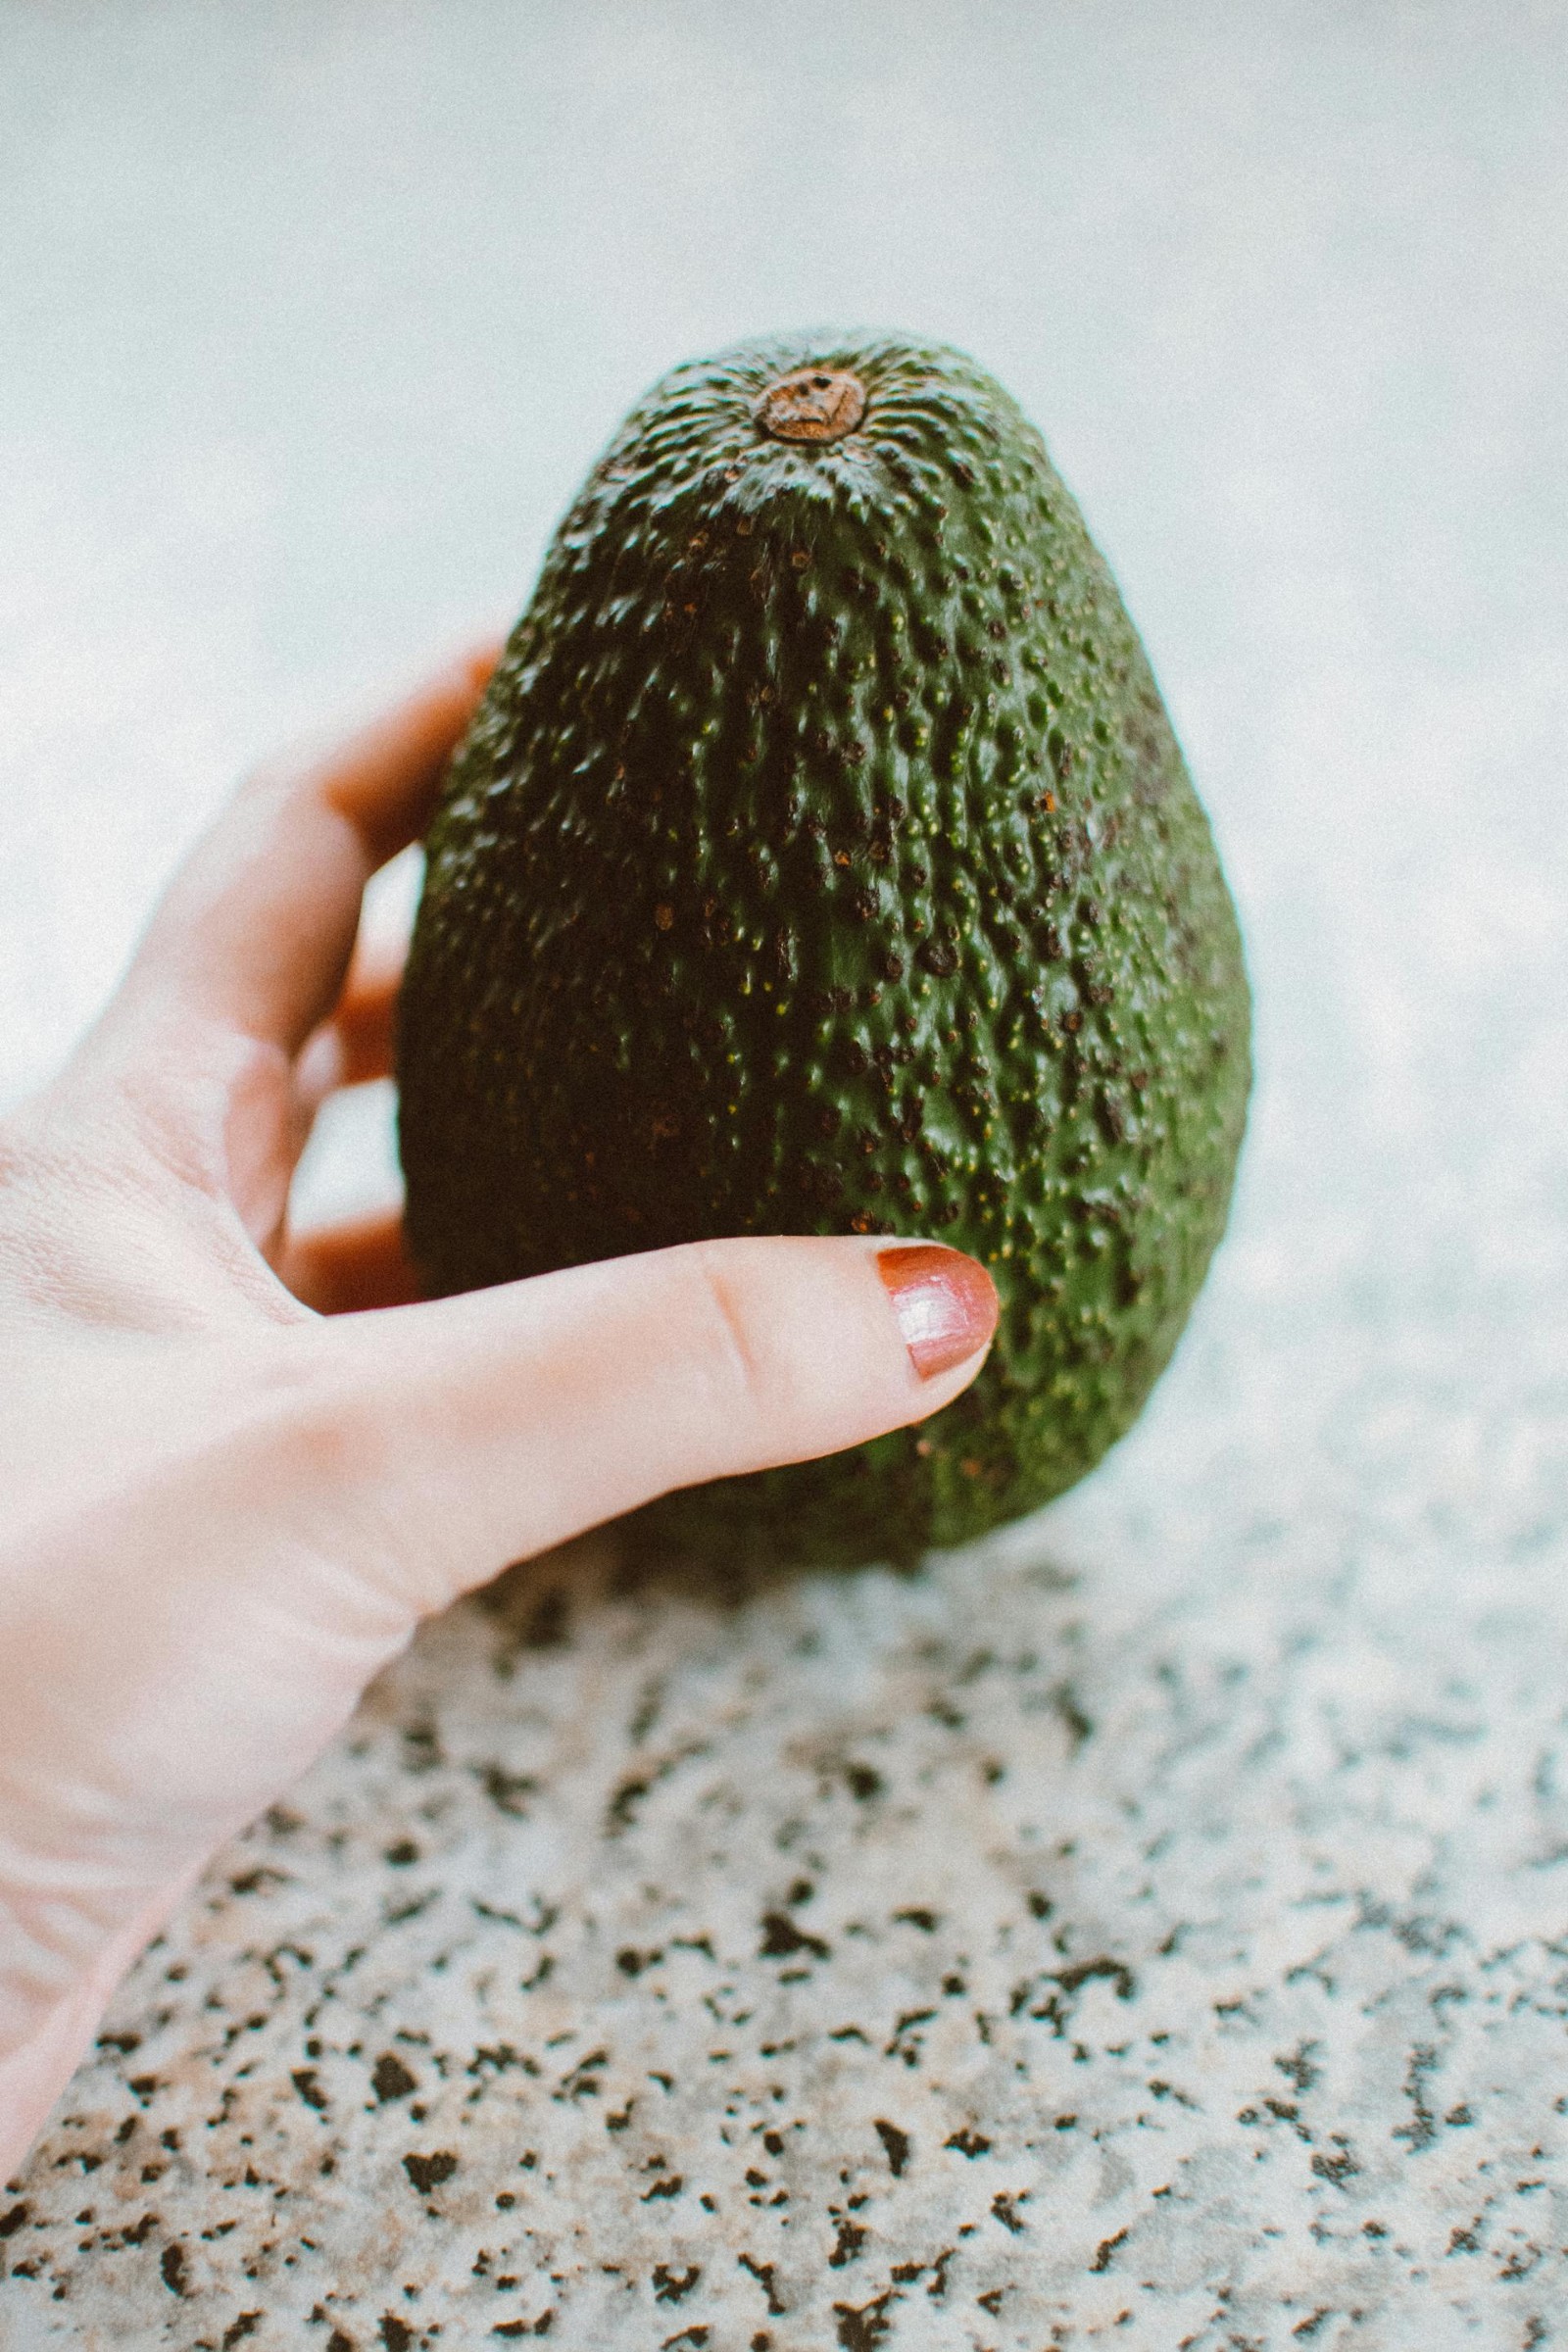 A hand holding an avocado.